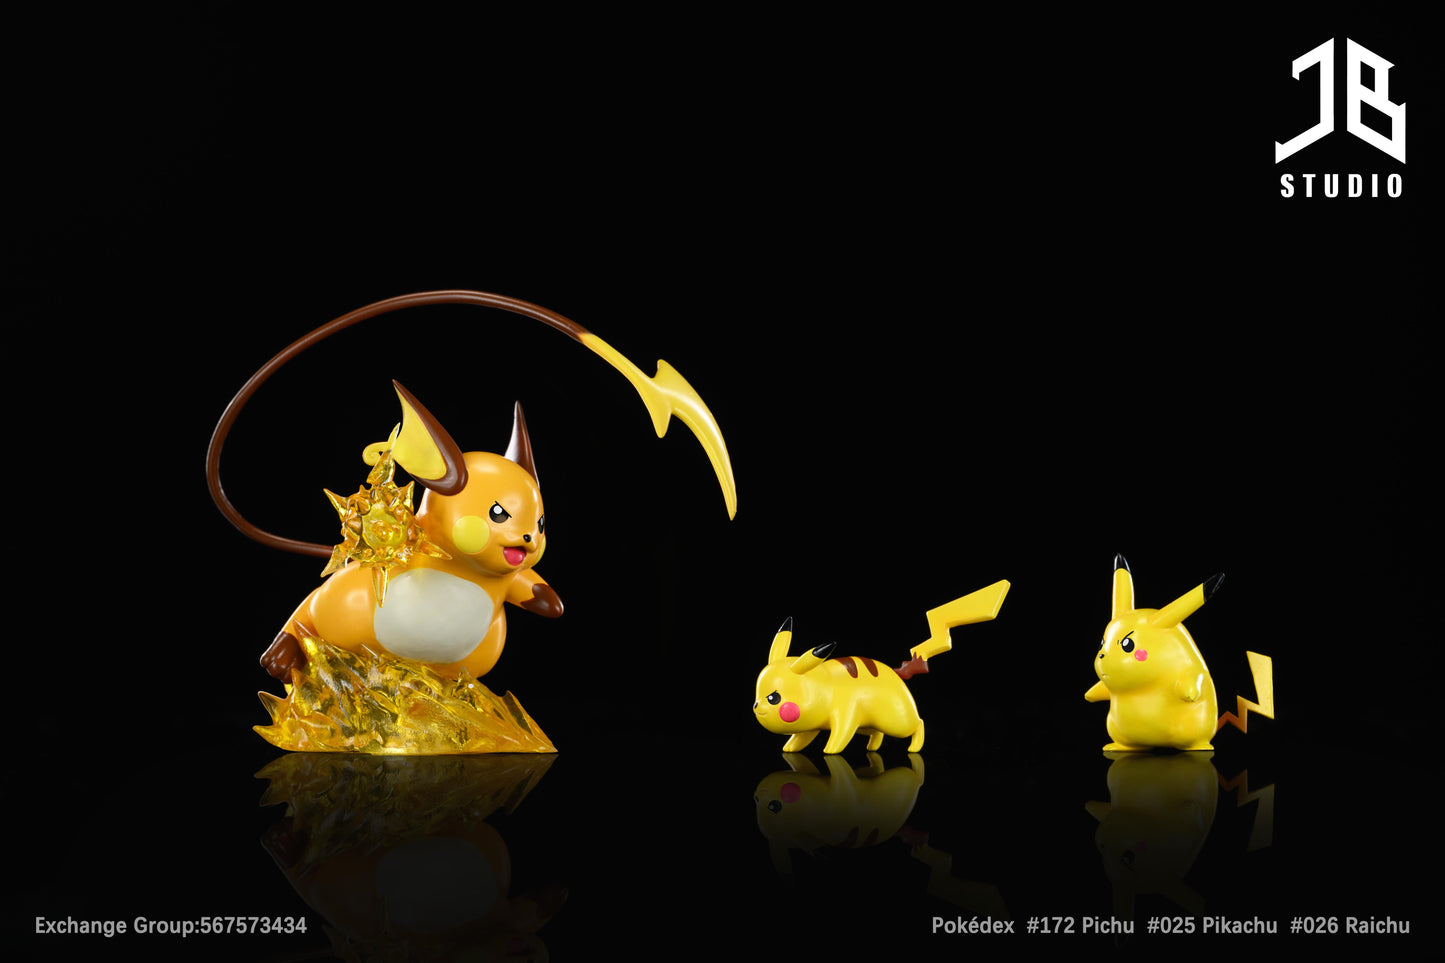 〖 Pre-order〗Pokemon Scale World  Pikachu Raichu Pichu #025 #026 #172 1:20  - JB Studio